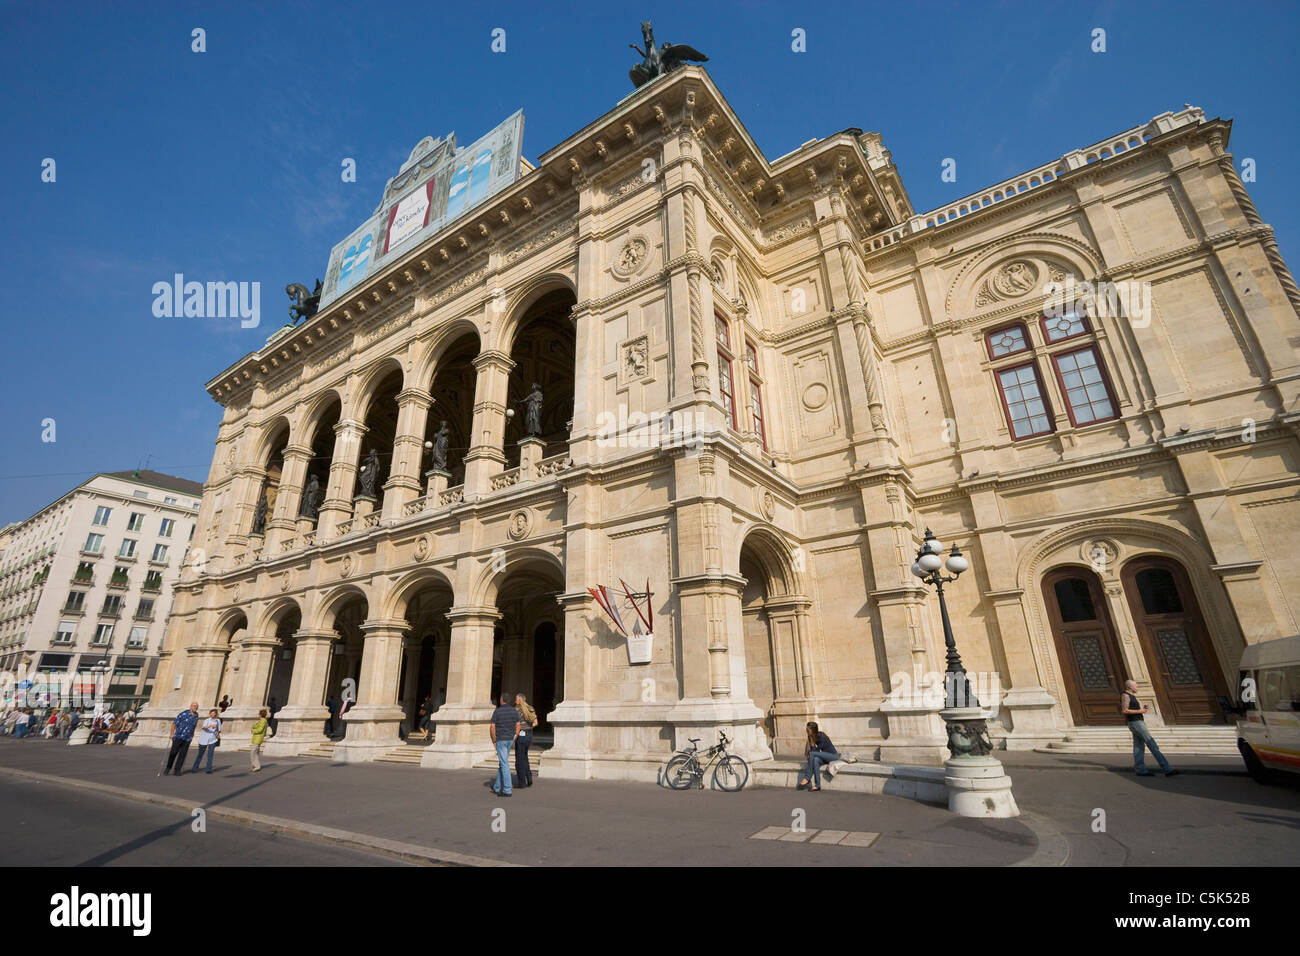 The Vienna State Opera House (Wiener Staatsoper), Vienna, Austria Stock Photo